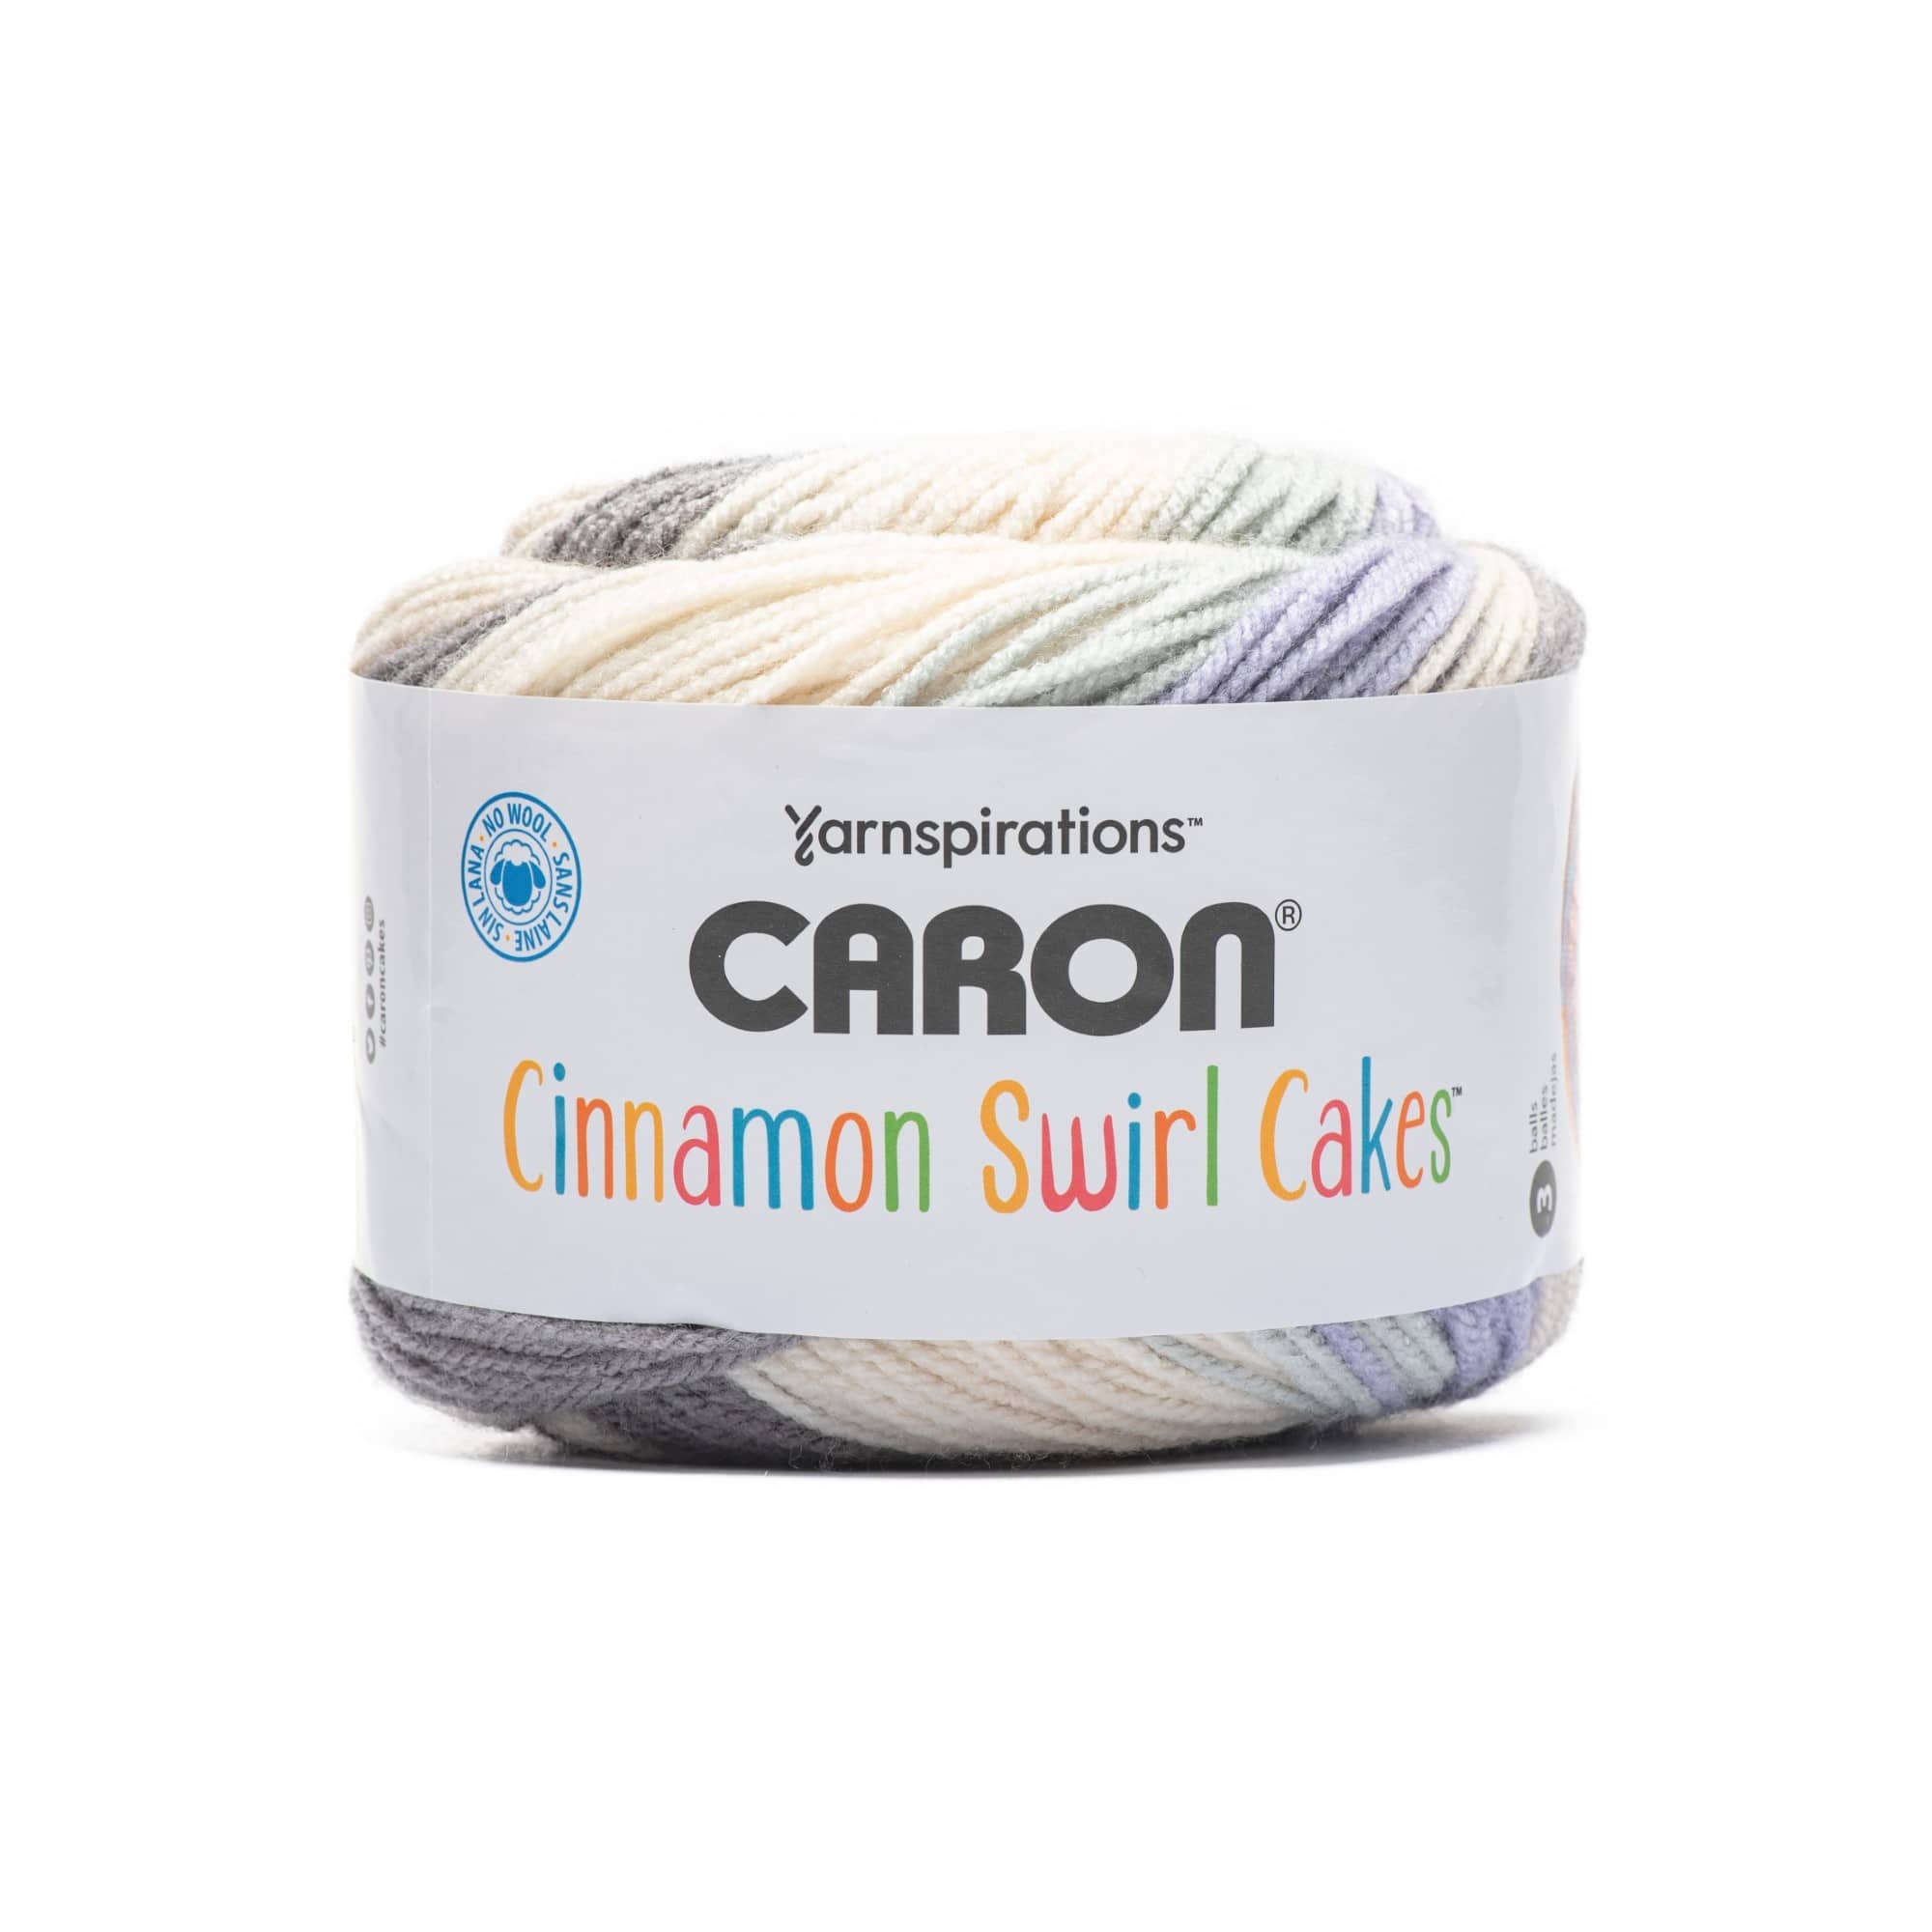 Caron Cinnamon Swirl Cakes Crochet Yarn in Marble | Size: 454g/16oz | Pattern: Crochet | by Yarnspirations